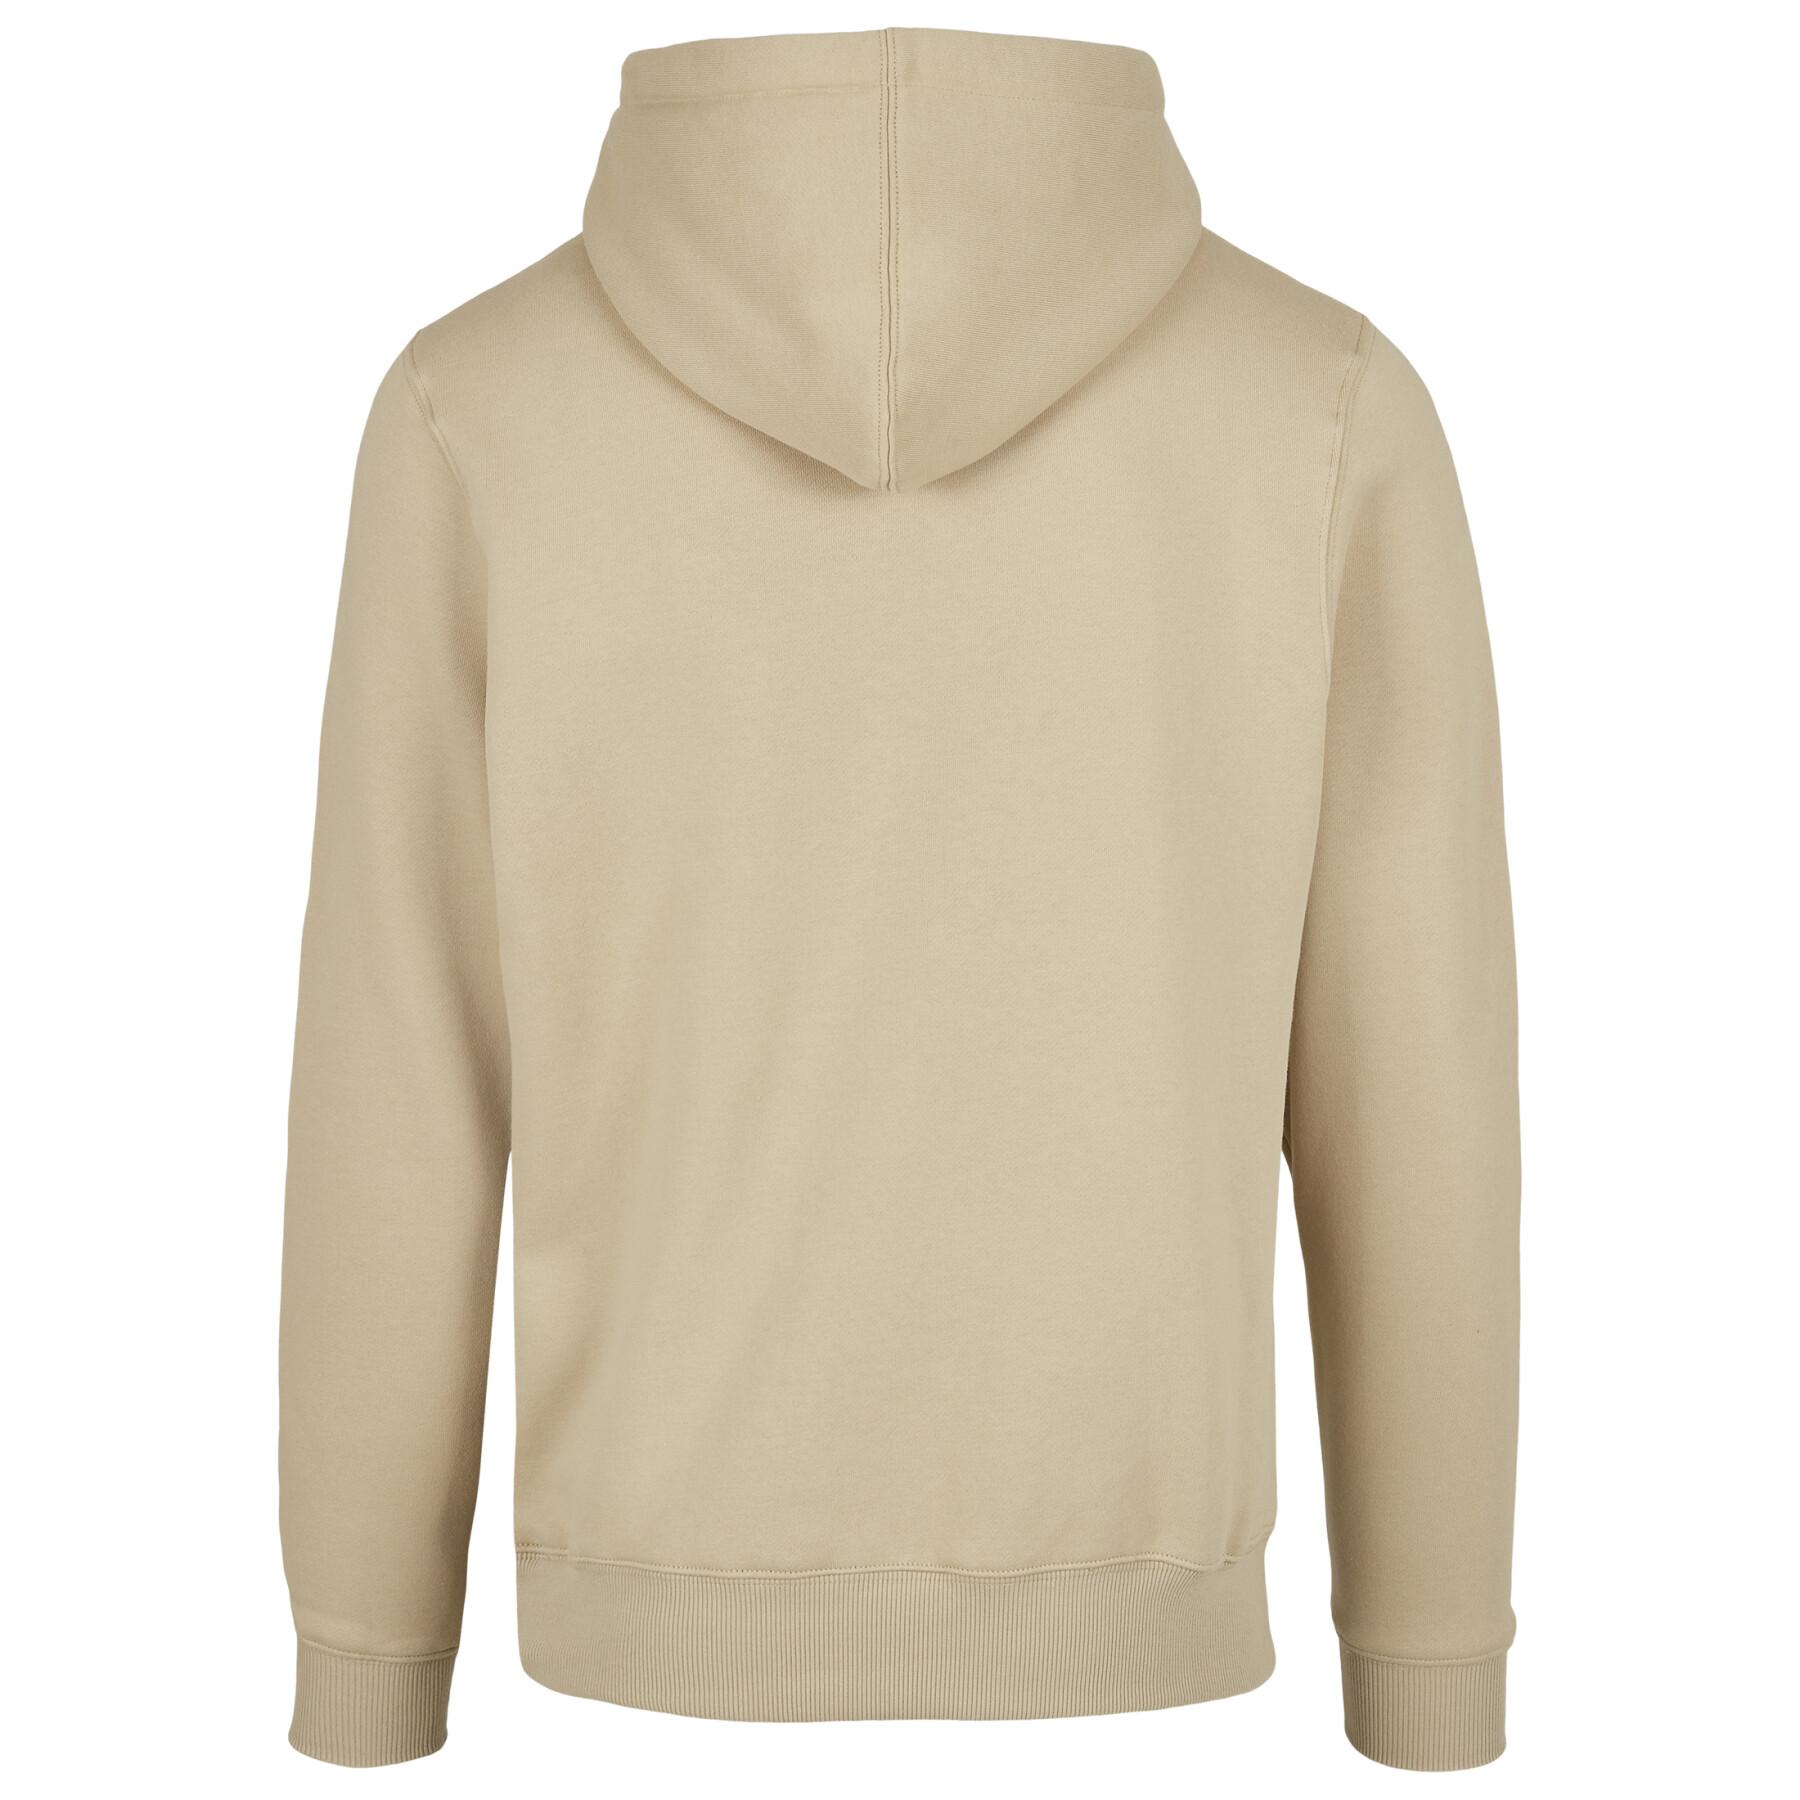 Plain hooded sweatshirt Cayler & Sons